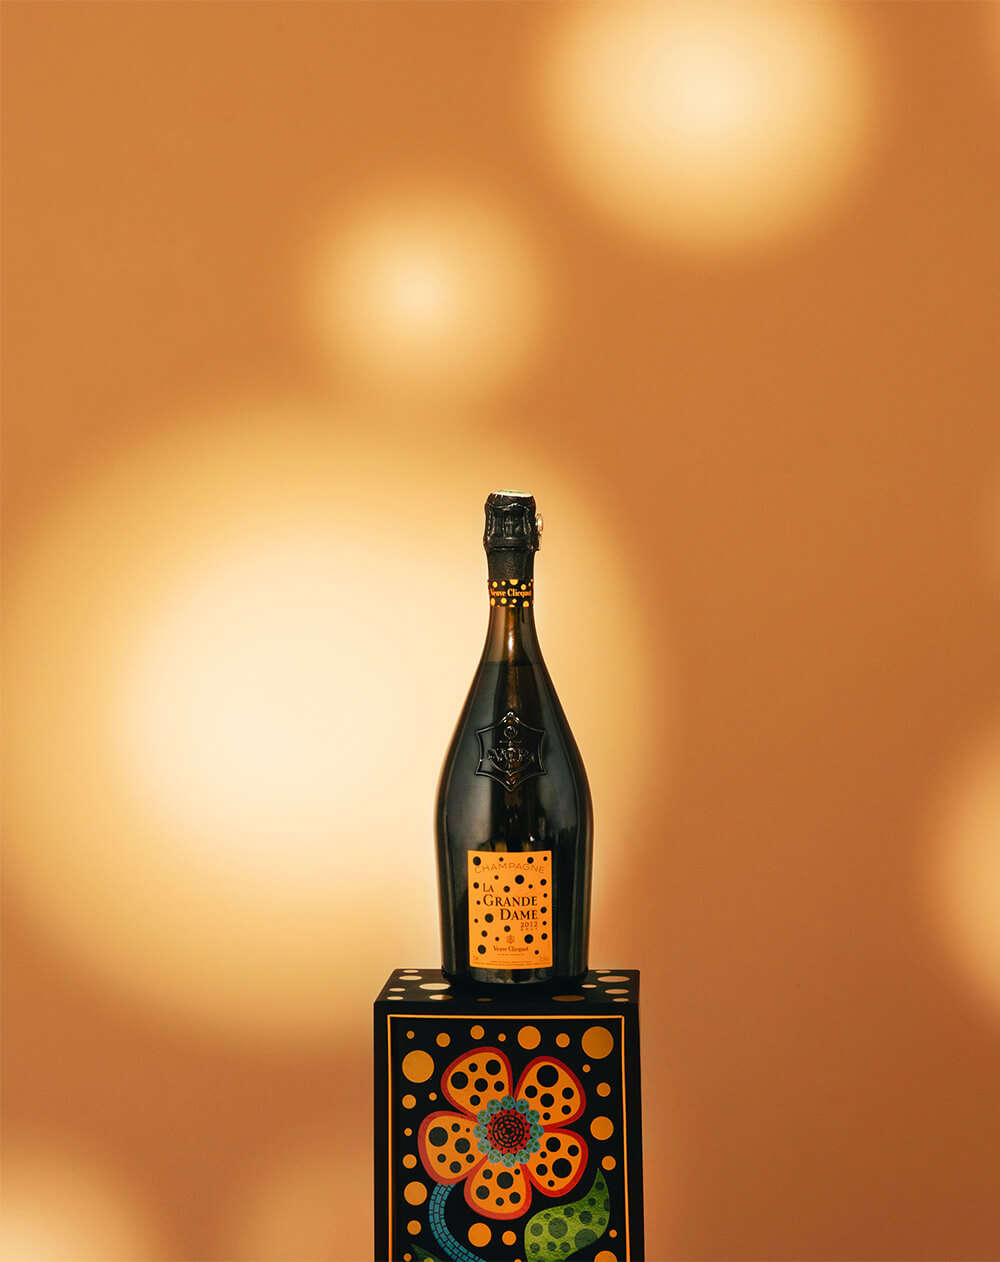 Veuve Clicquot La Grande Dame 2012 Yayoi Kusama, Buy wine online